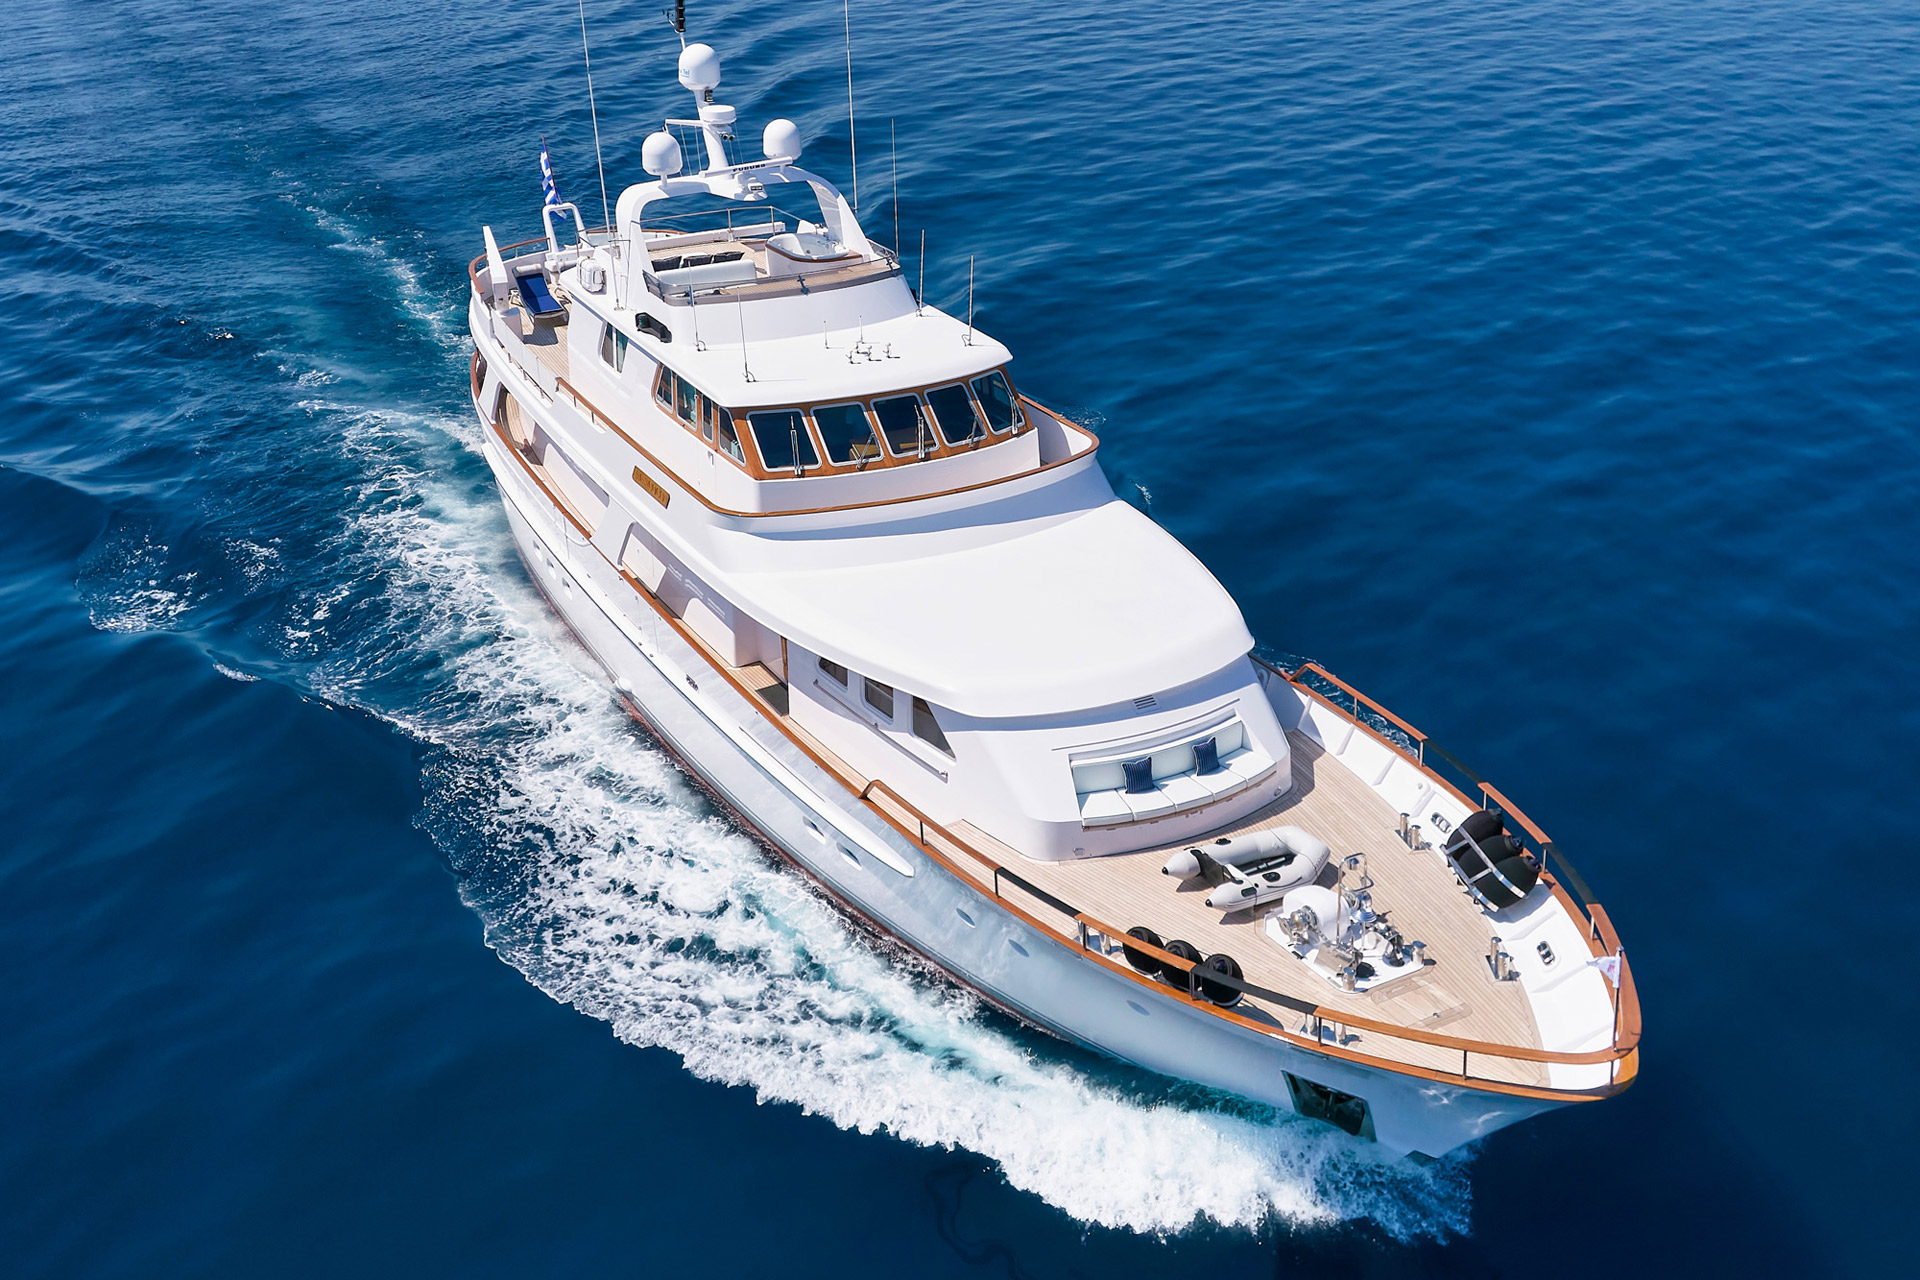 Luxury yacht SUNCOCO